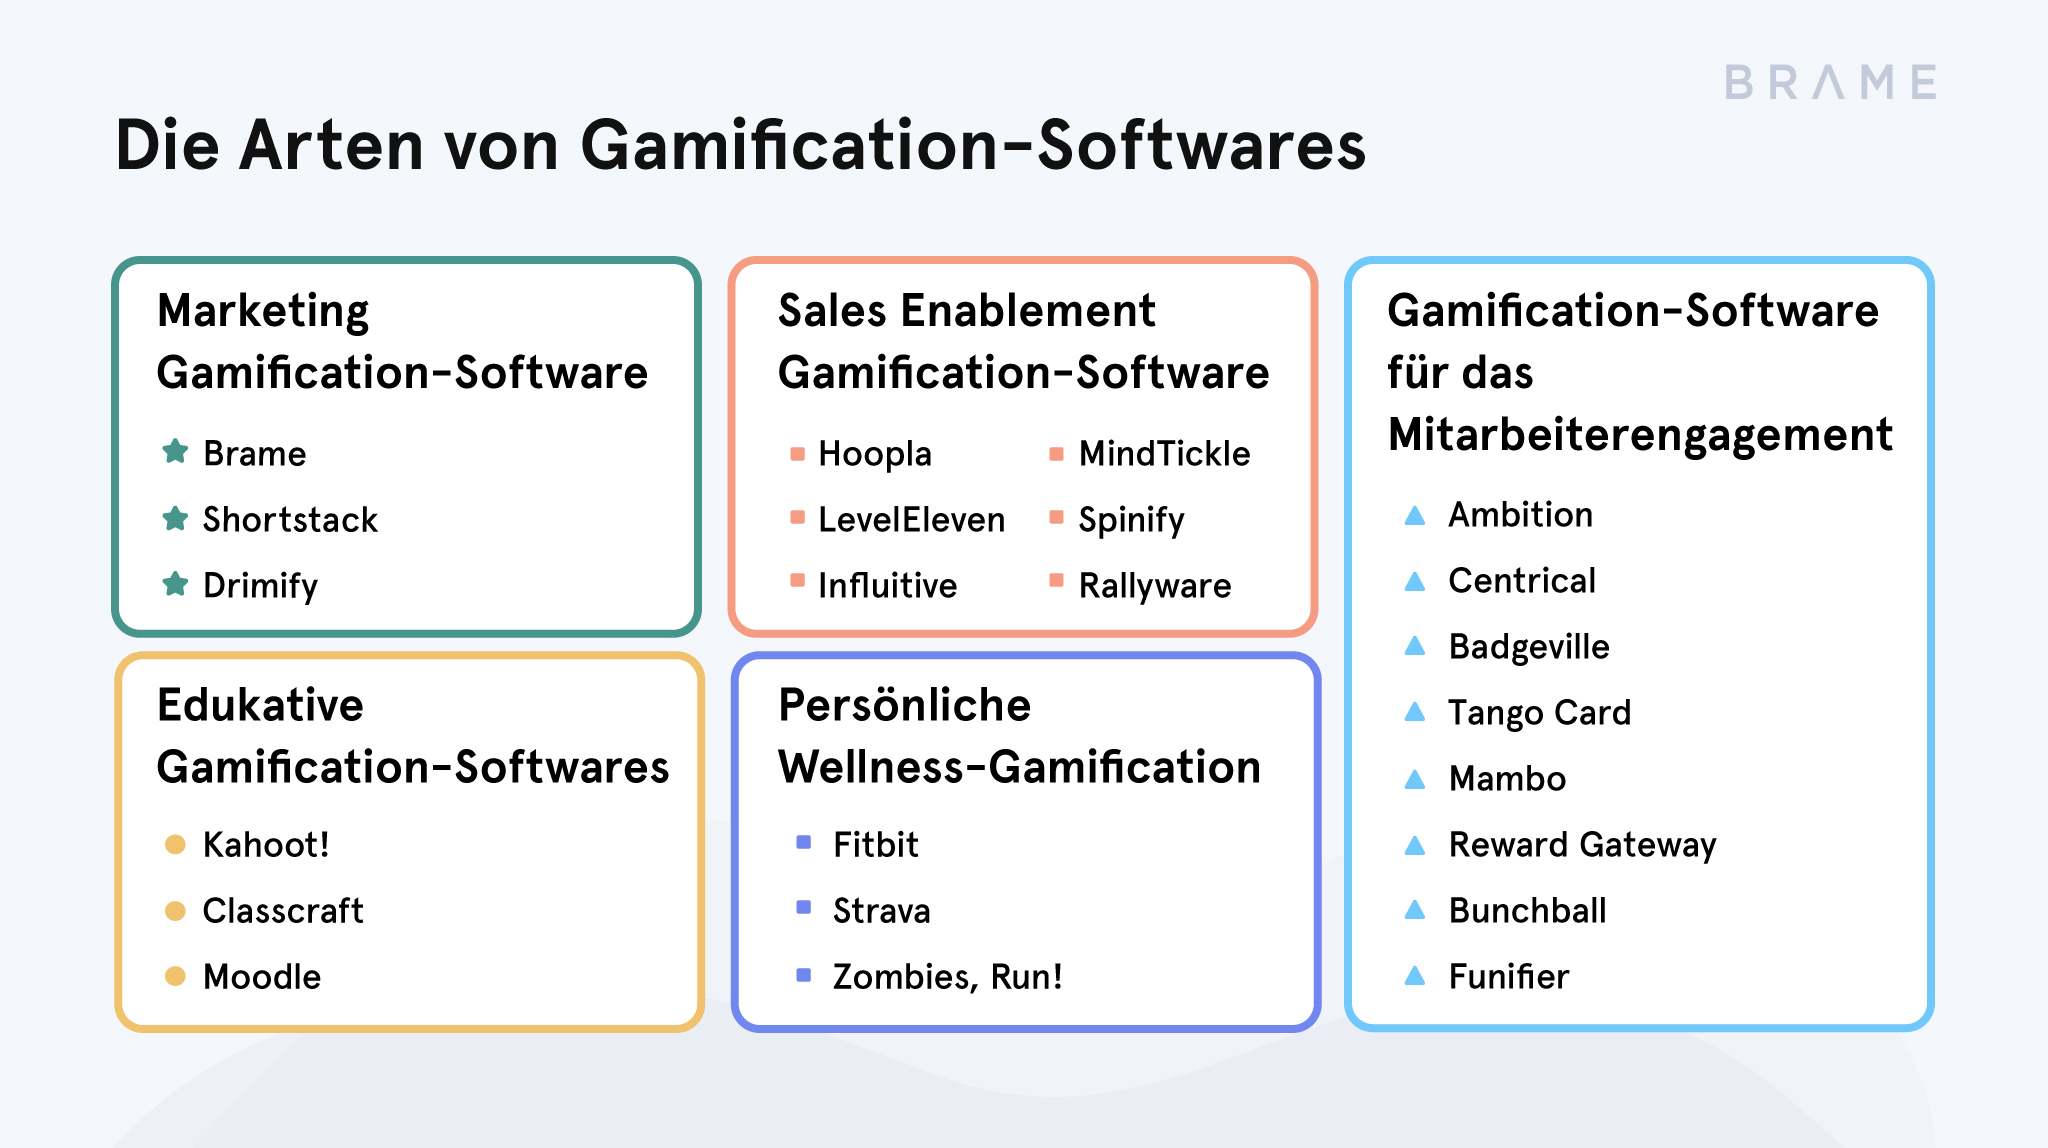 Gamification-Softwares Arten